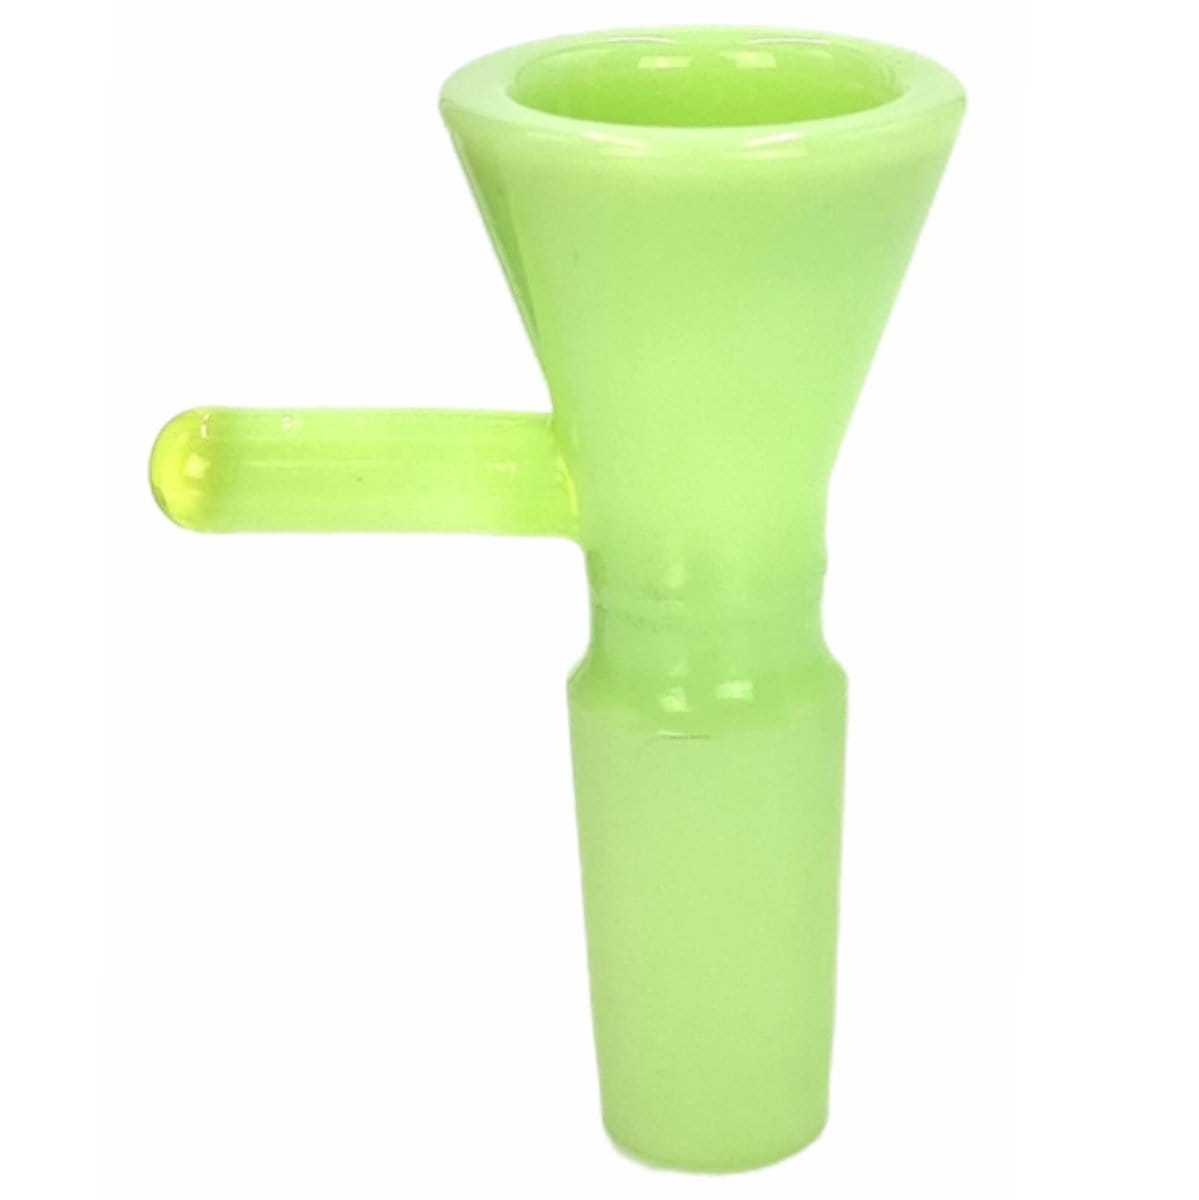 Prism Accessories Key Lime 14mm Bowls